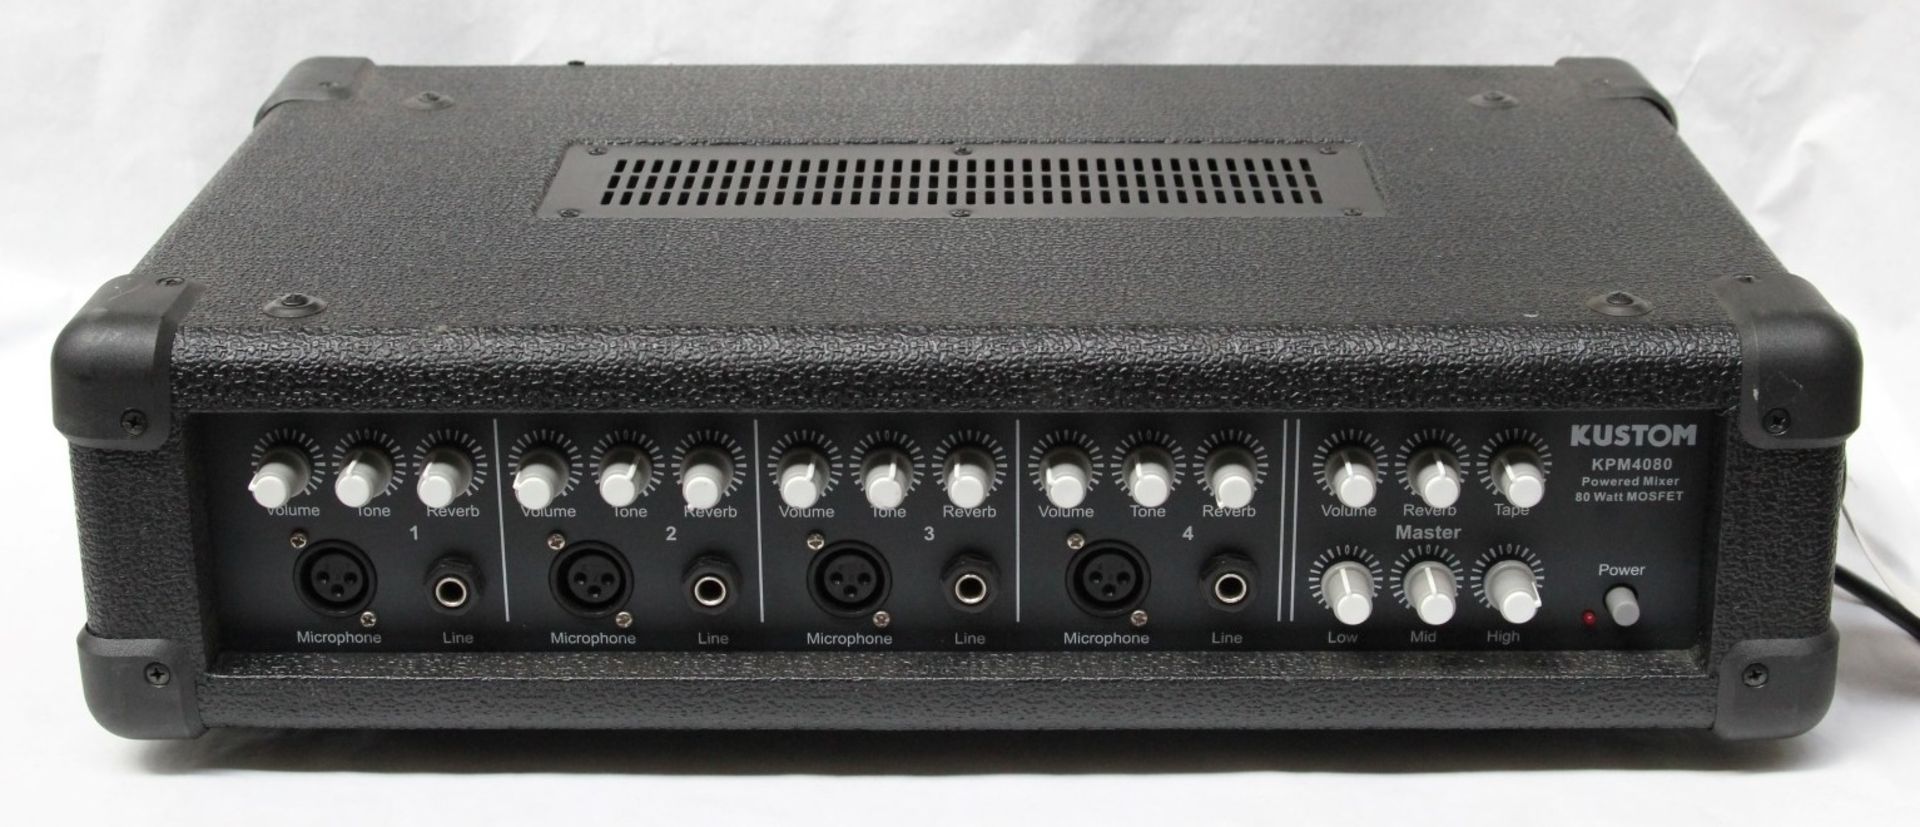 1 x Kustom KPM4080 Mosfet 80 Watt Power Mixer PA Amplifier - CL020 - Location: Altrincham WA14